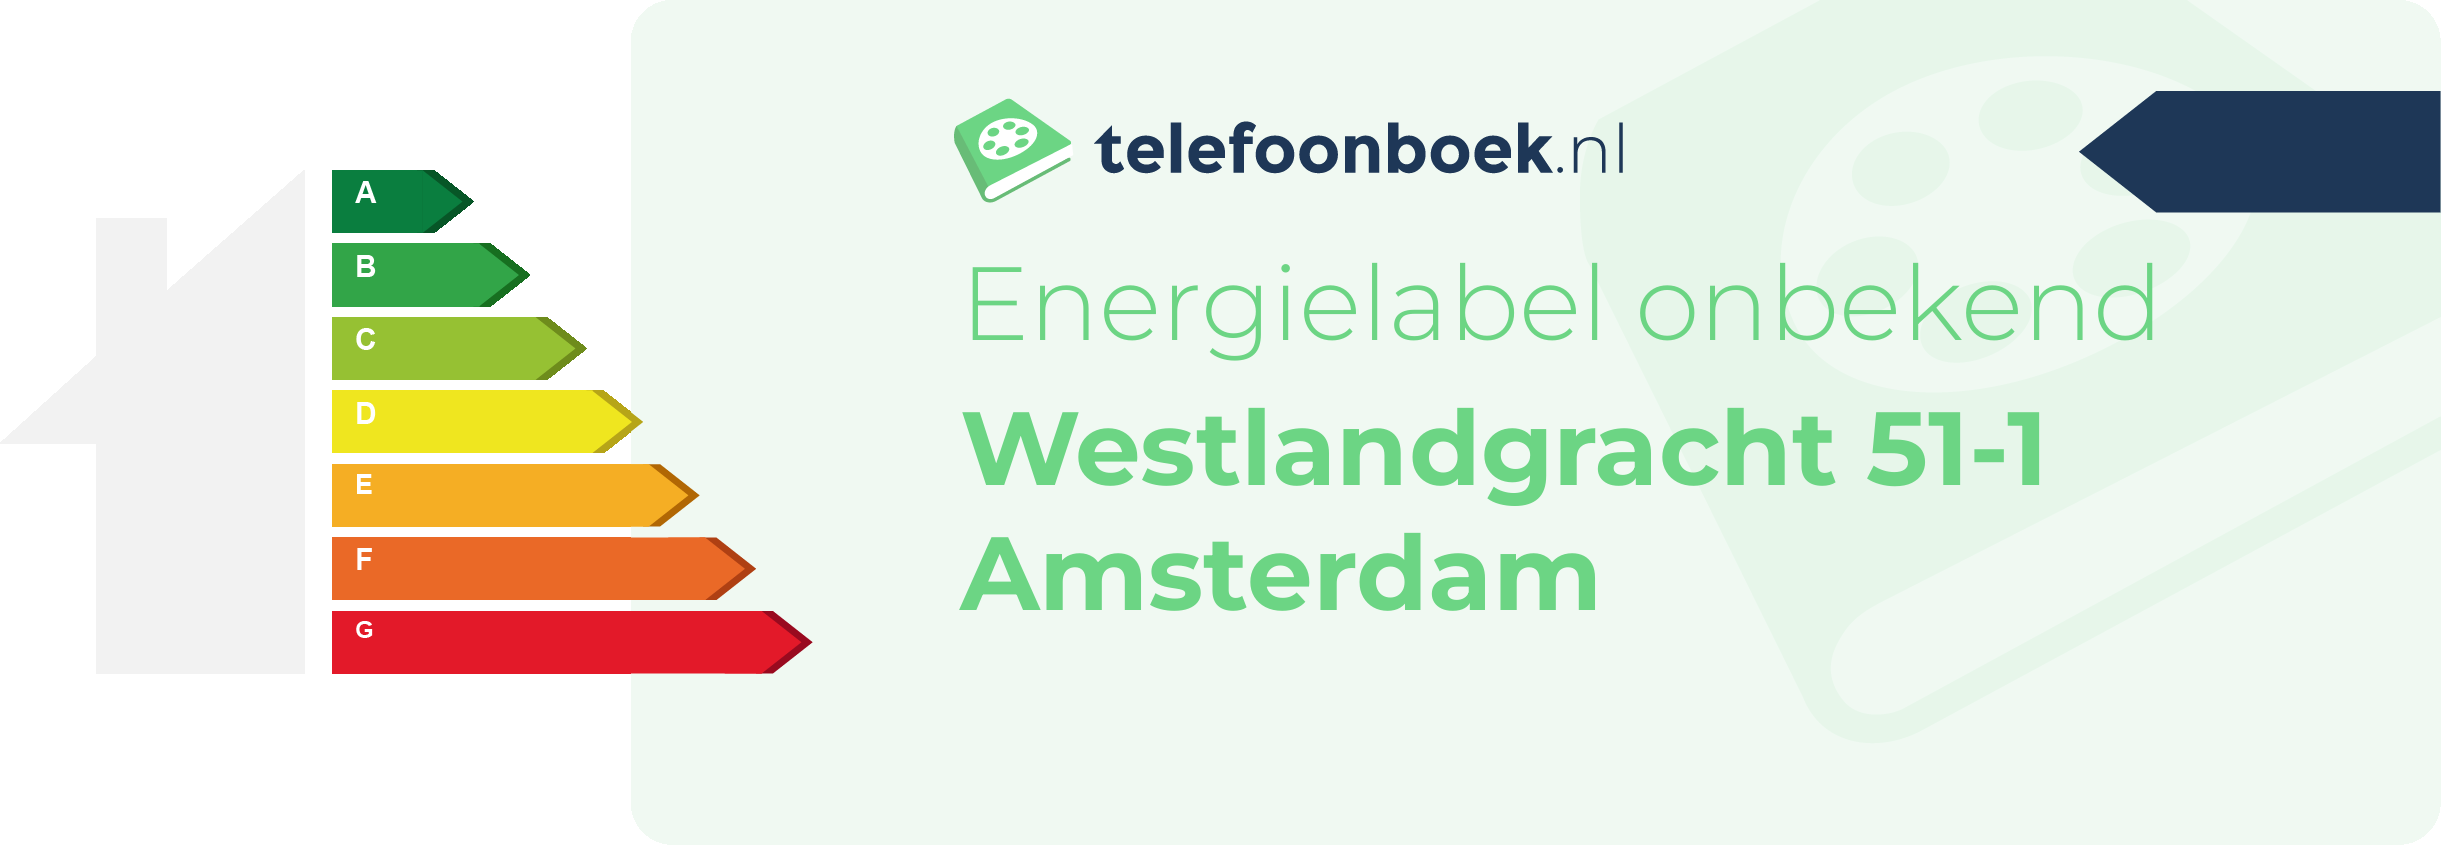 Energielabel Westlandgracht 51-1 Amsterdam